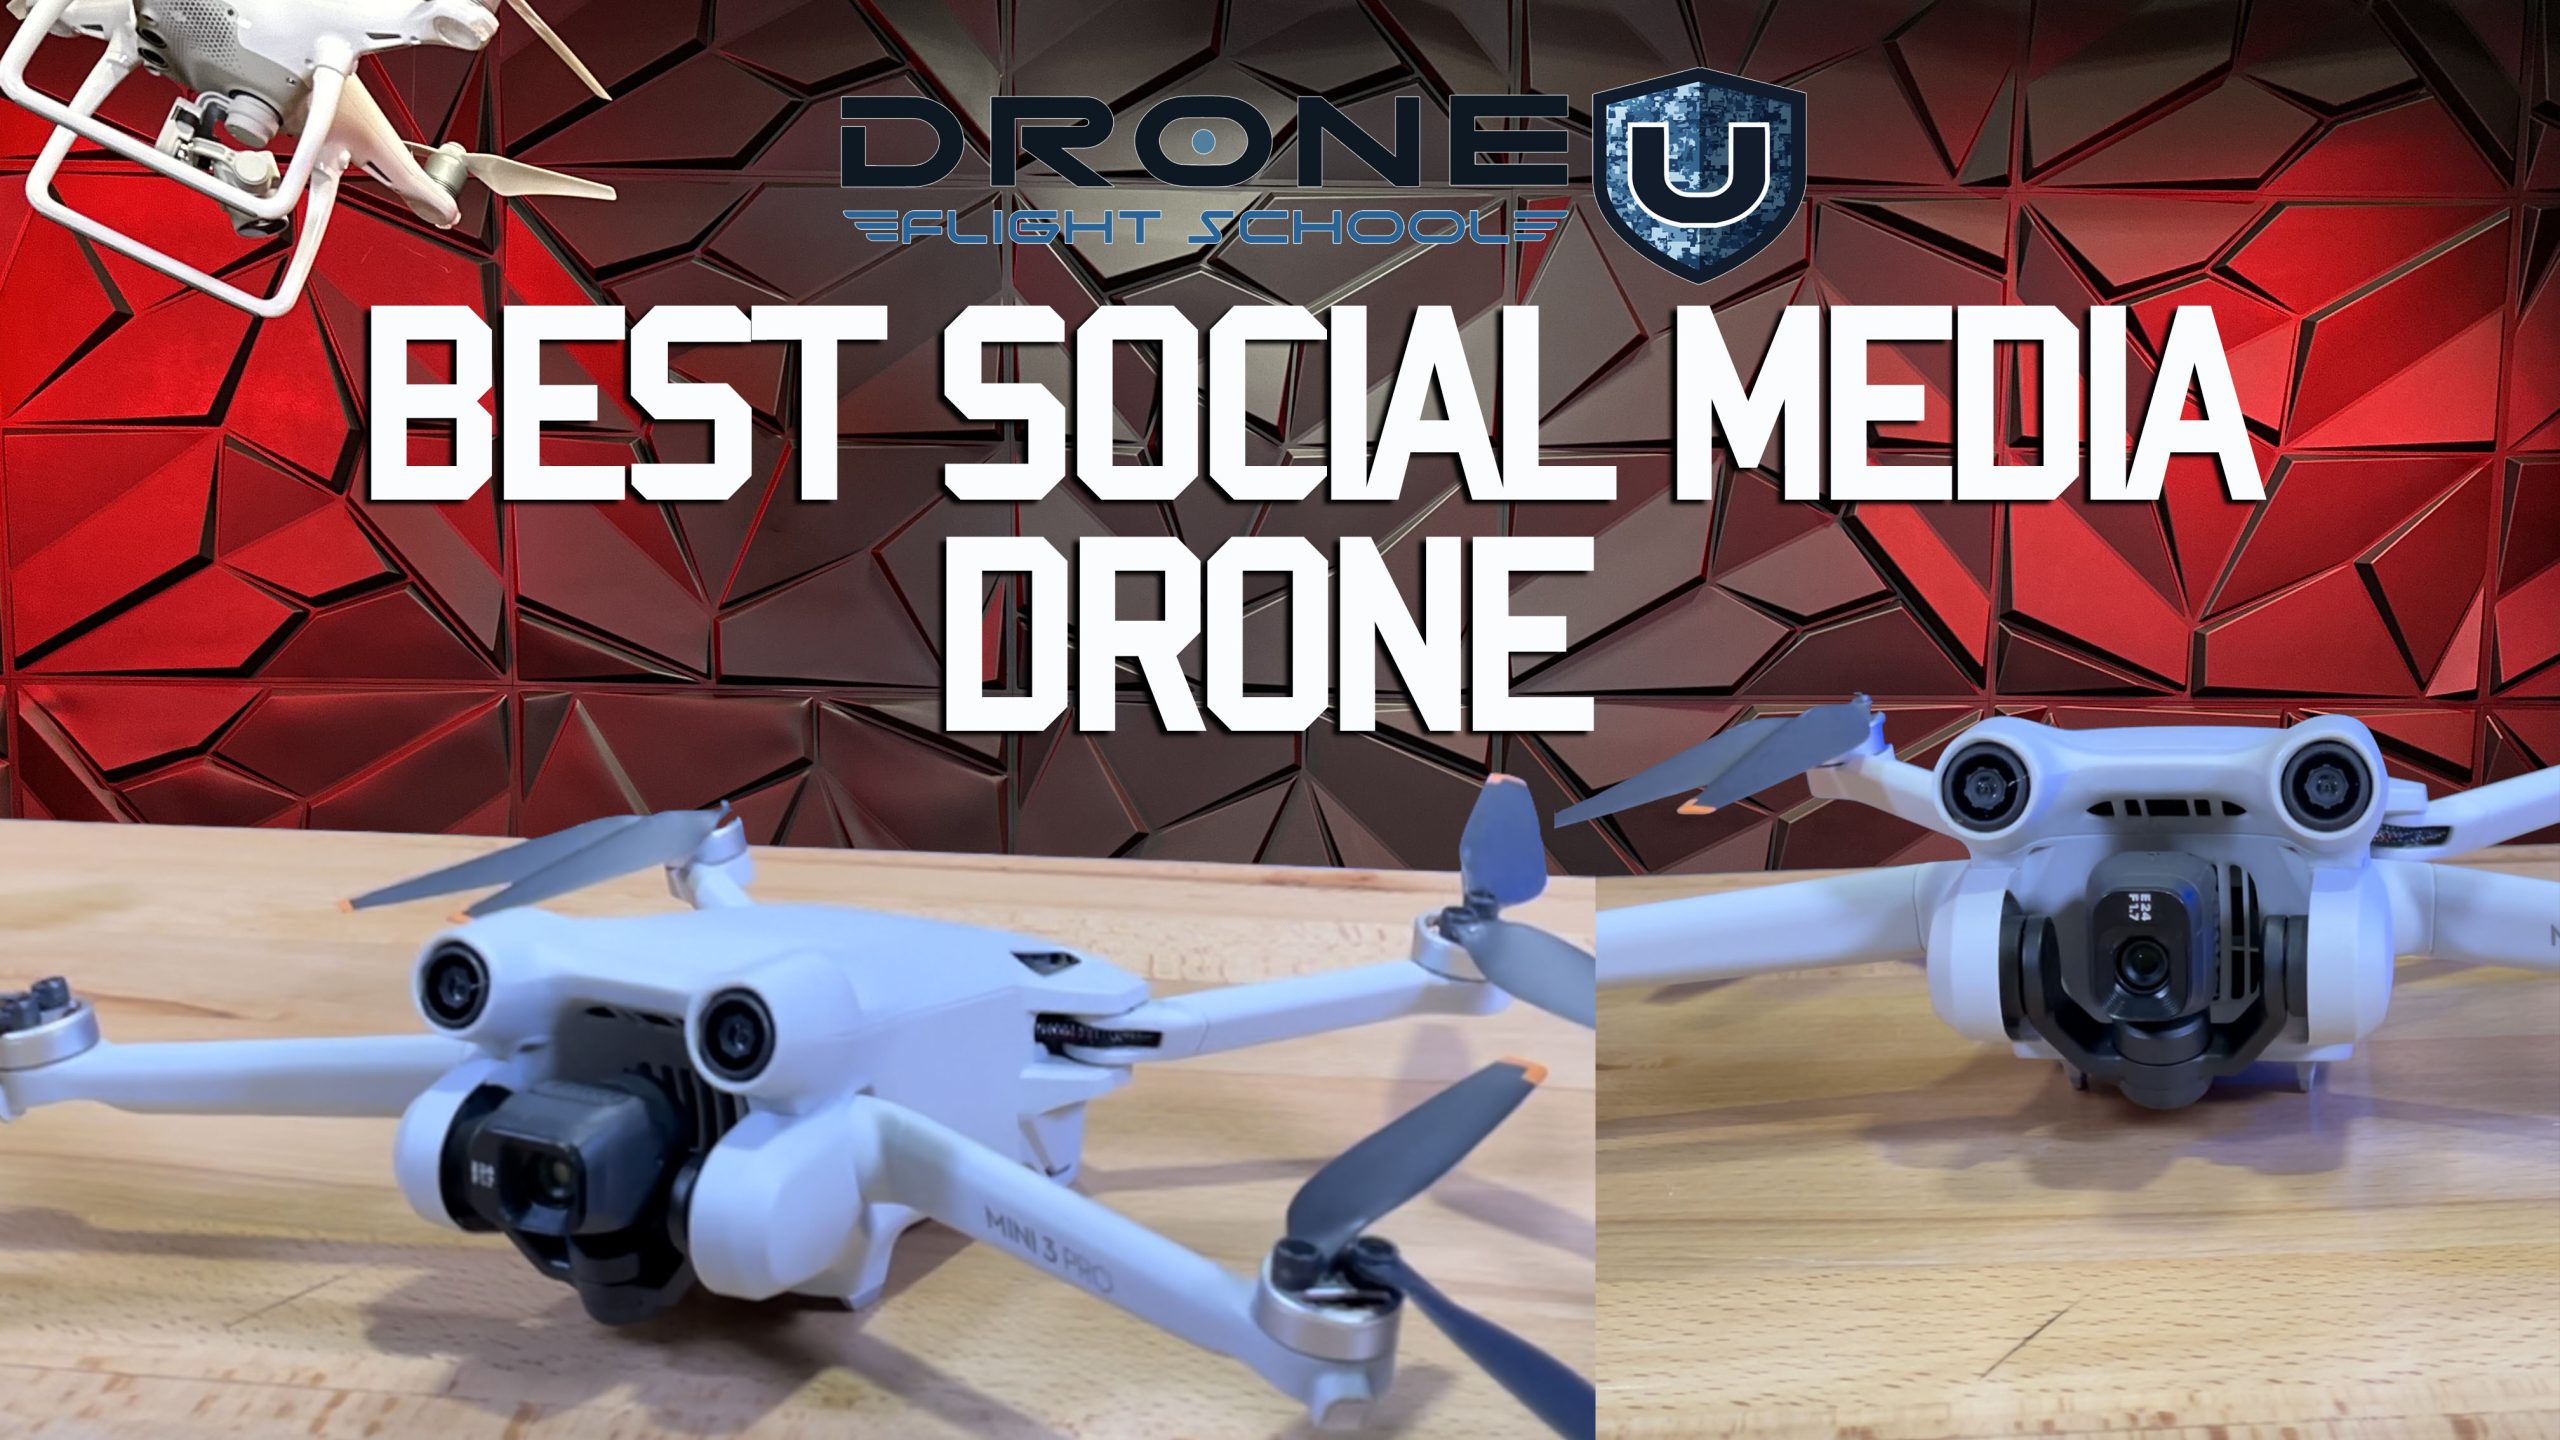 Best Social Media Drone - Drone